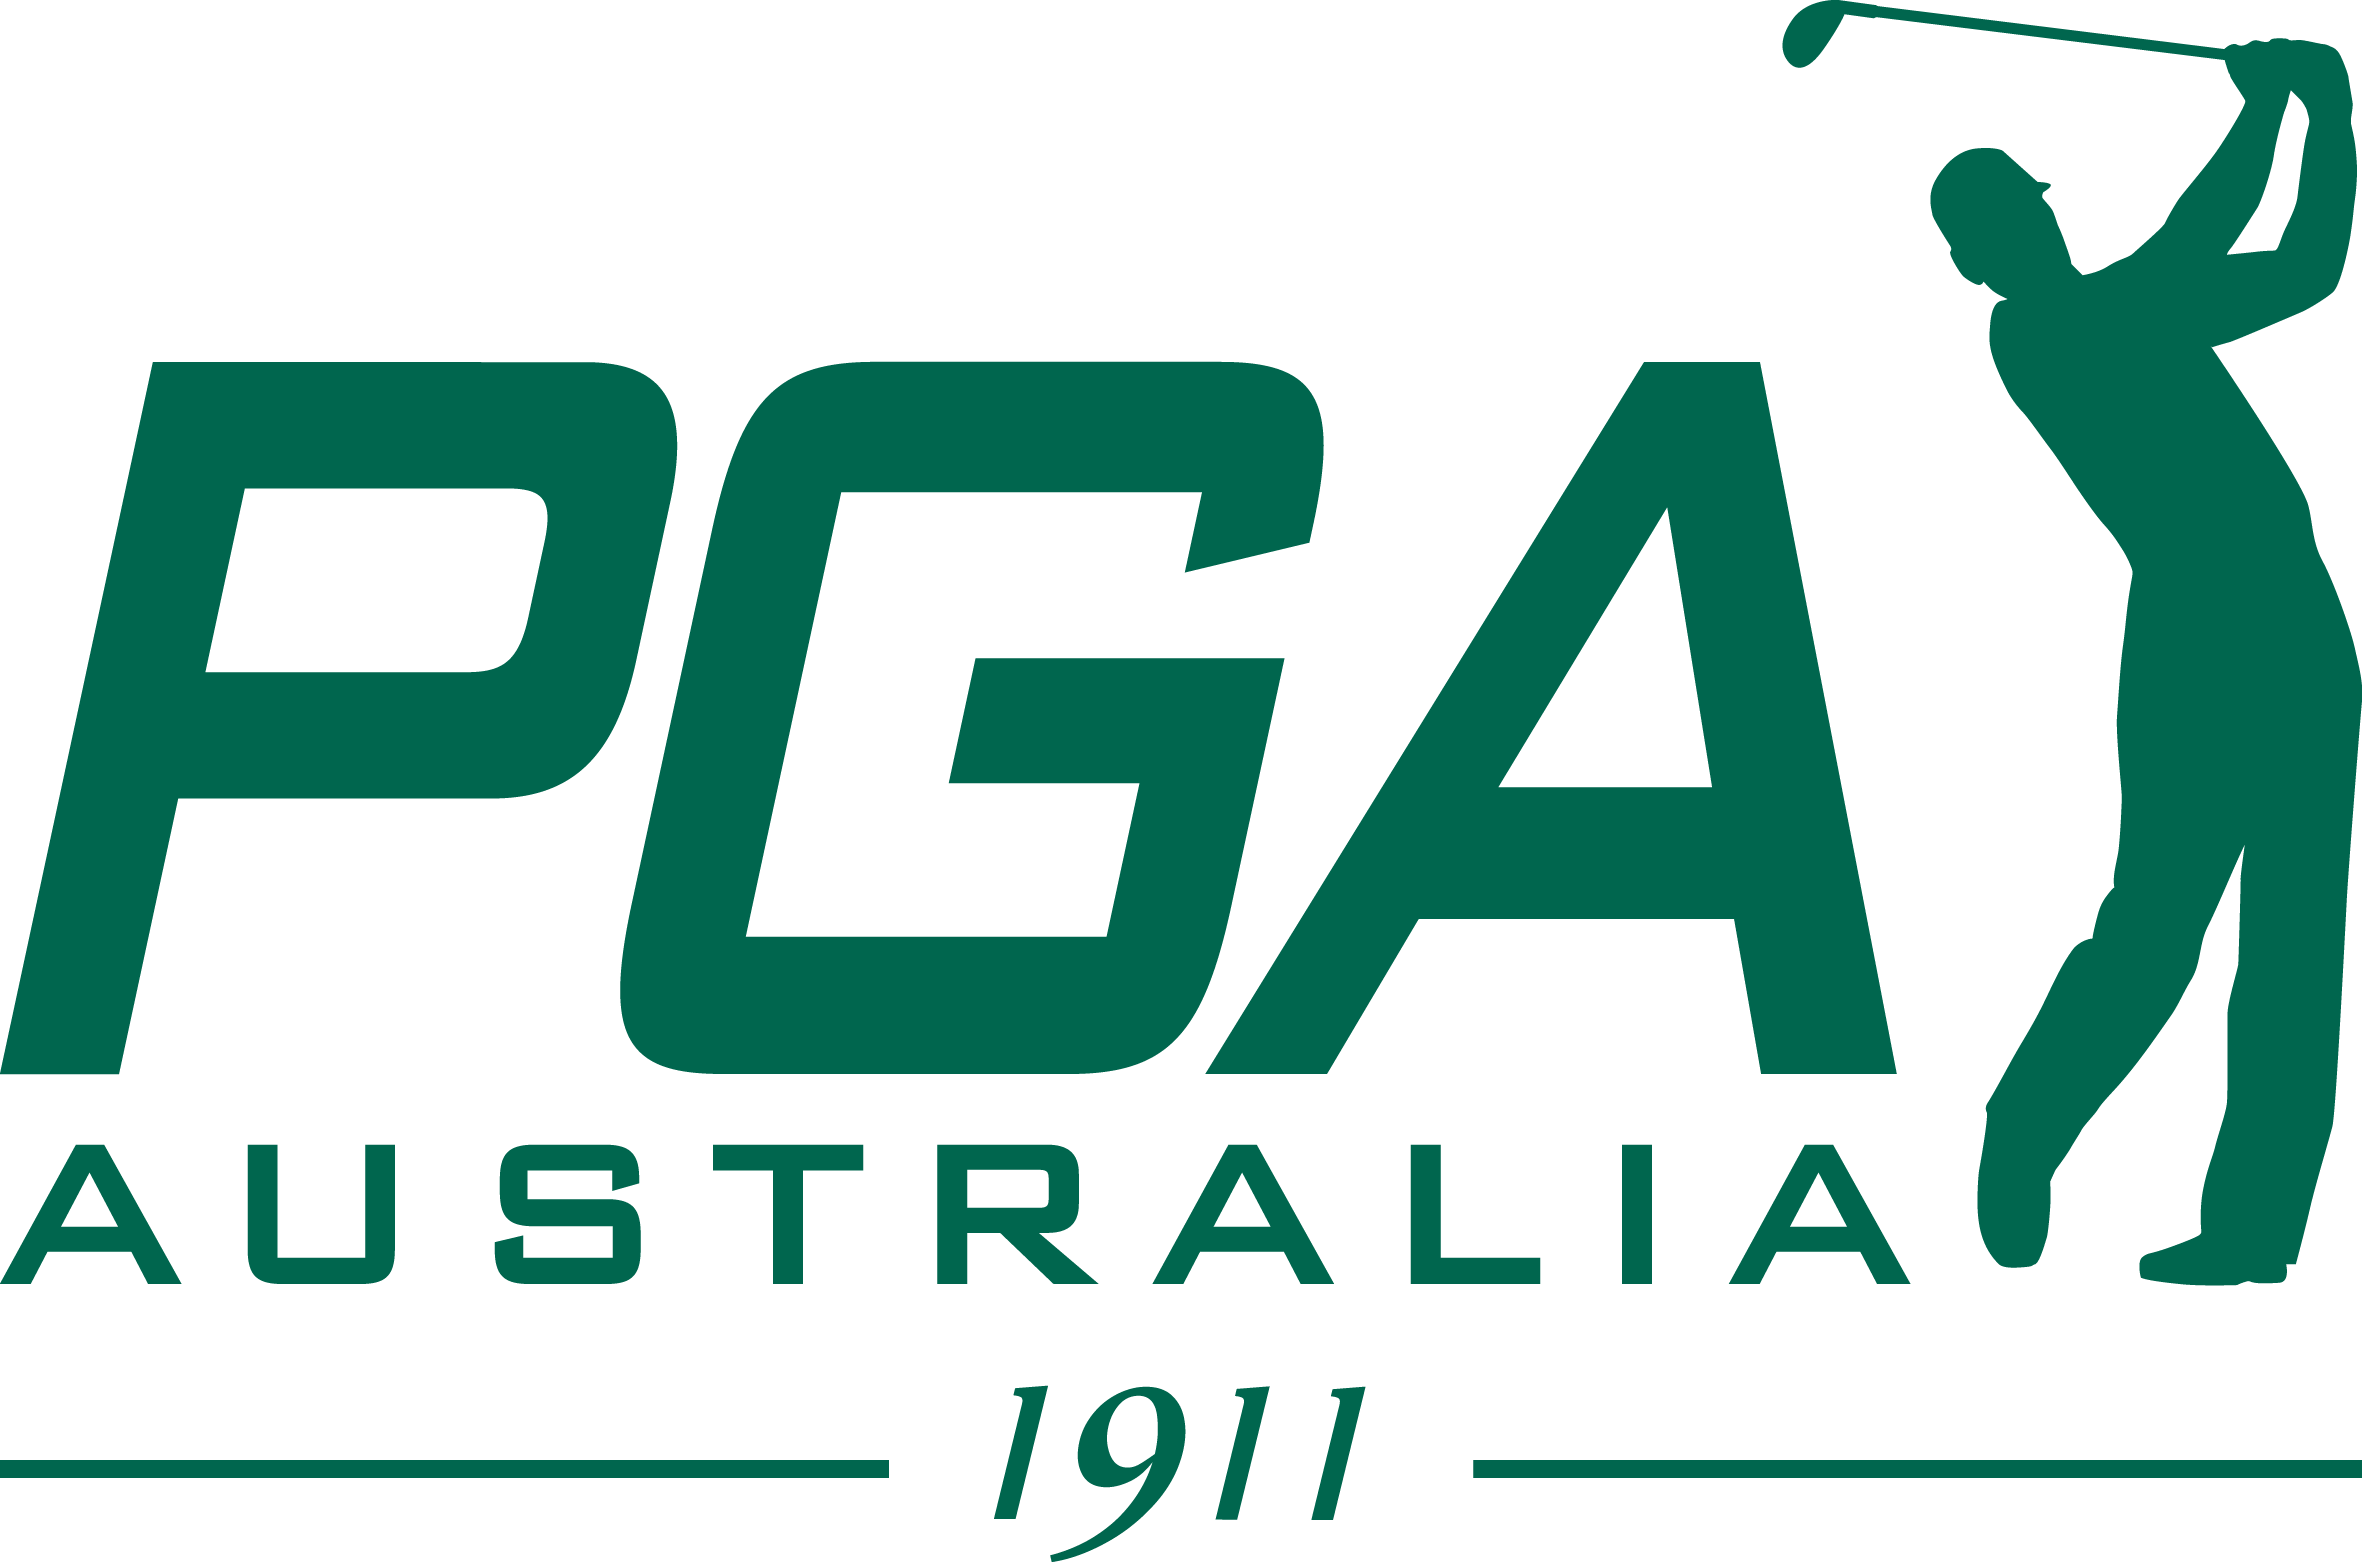 PGA: Tasmania’s bid to become golfing capital